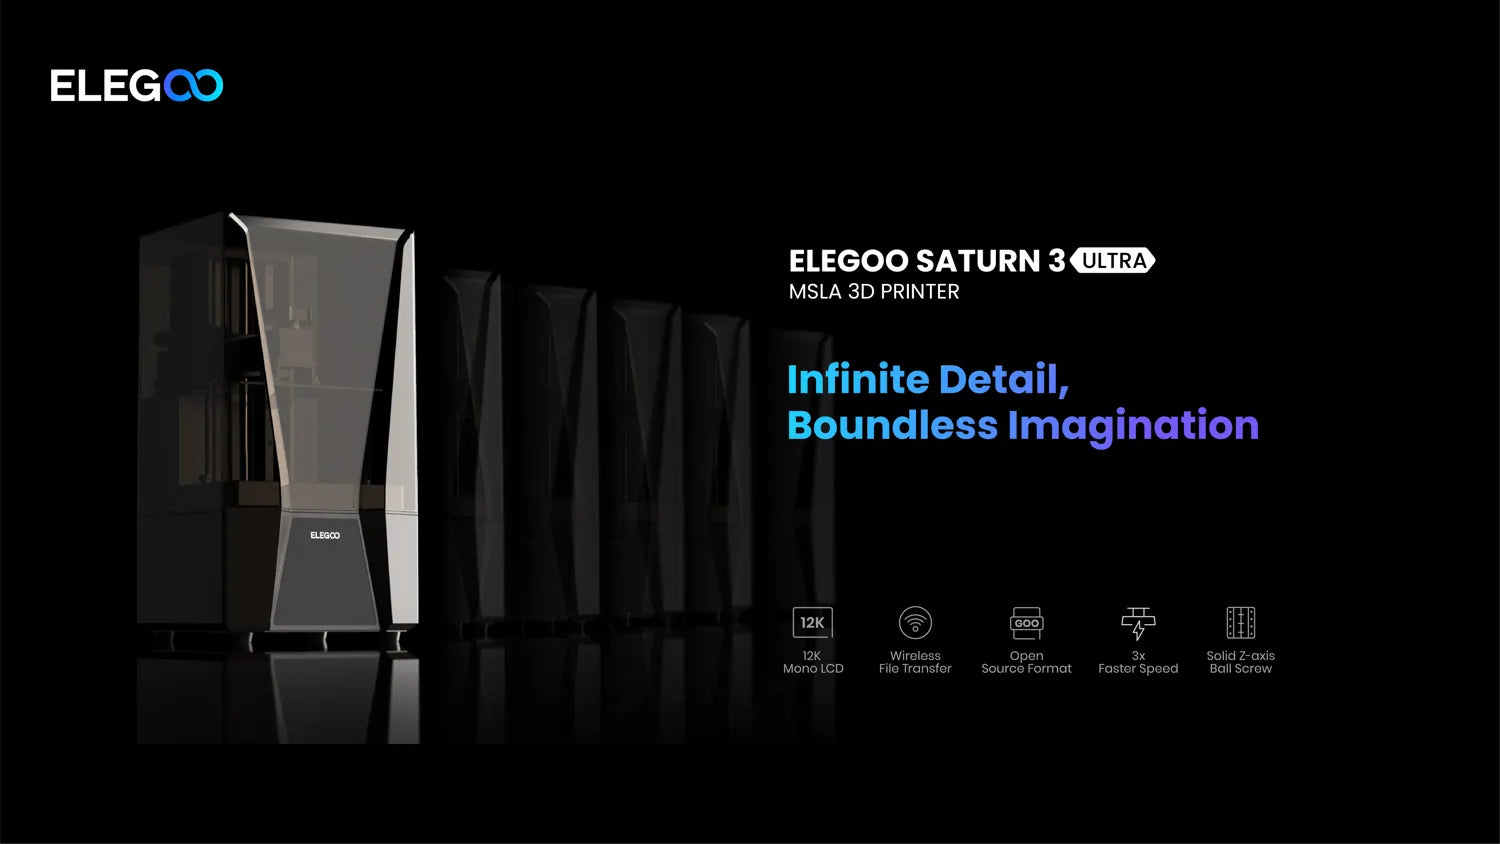 Elegoo Saturn 3 Ultra Resin 3D Printer #3dprinting